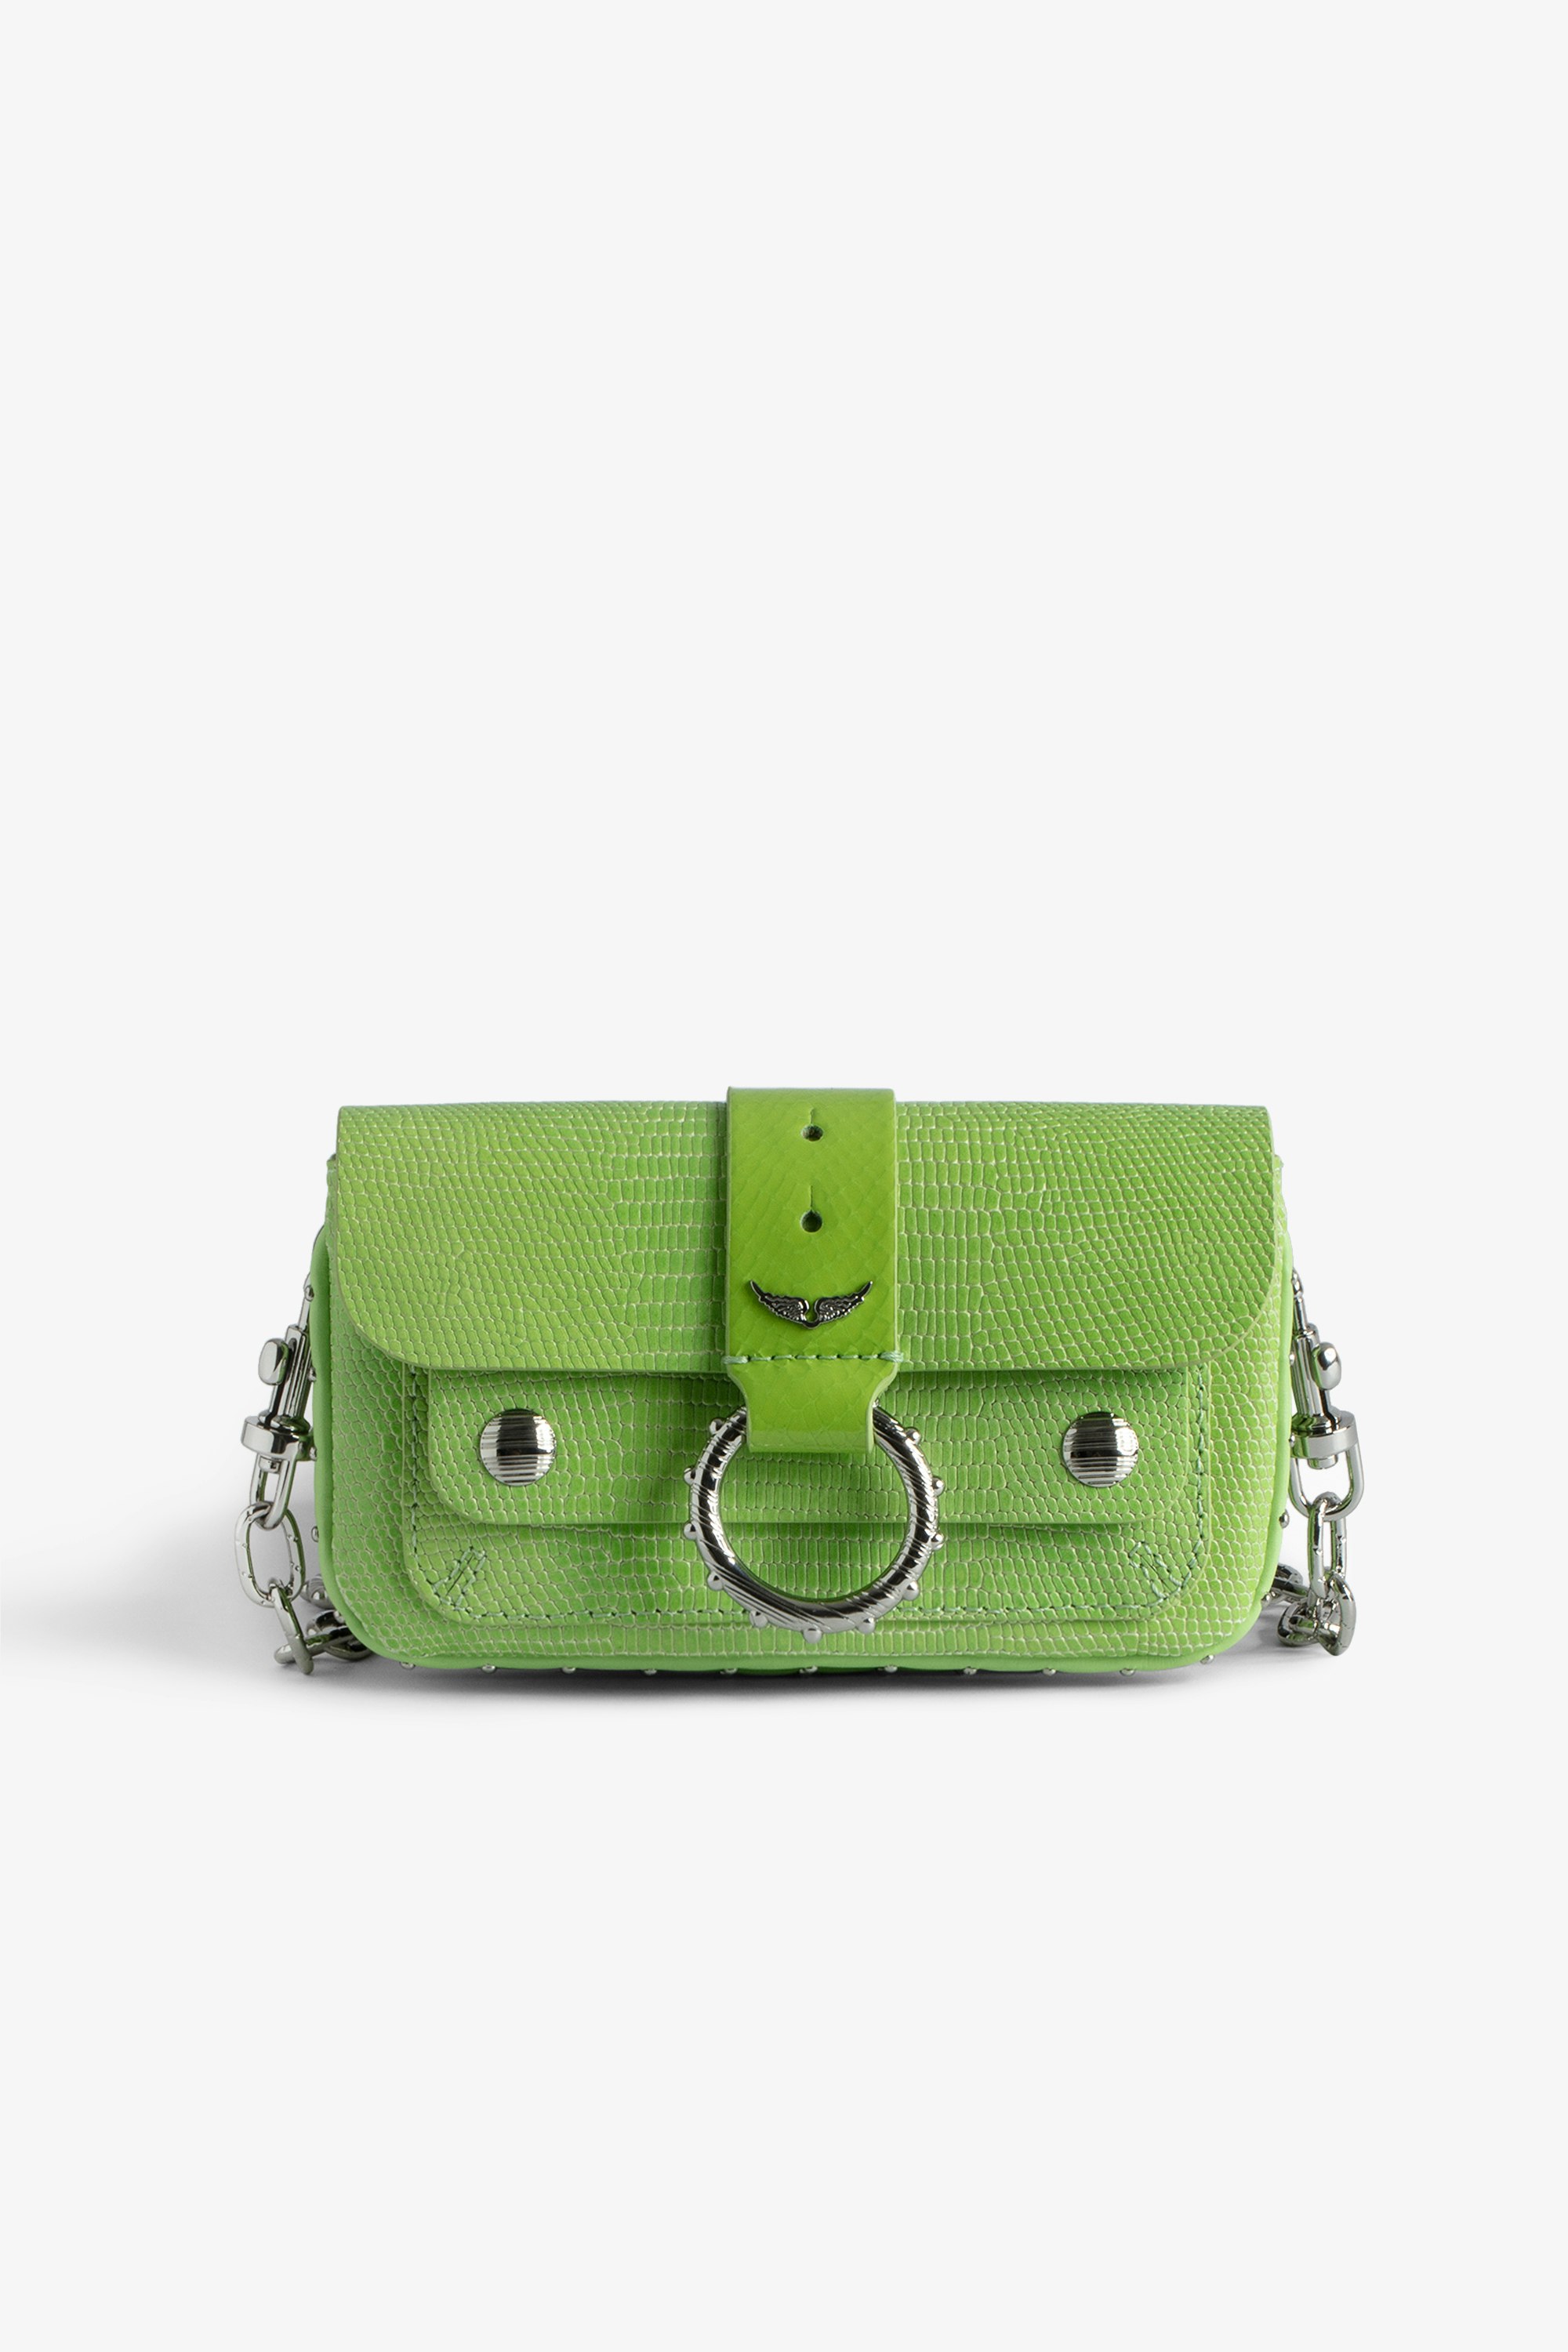 Sac Kate Wallet Glossy Wild - Mini sac en cuir brillant vert effet iguane à chaîne en métal.